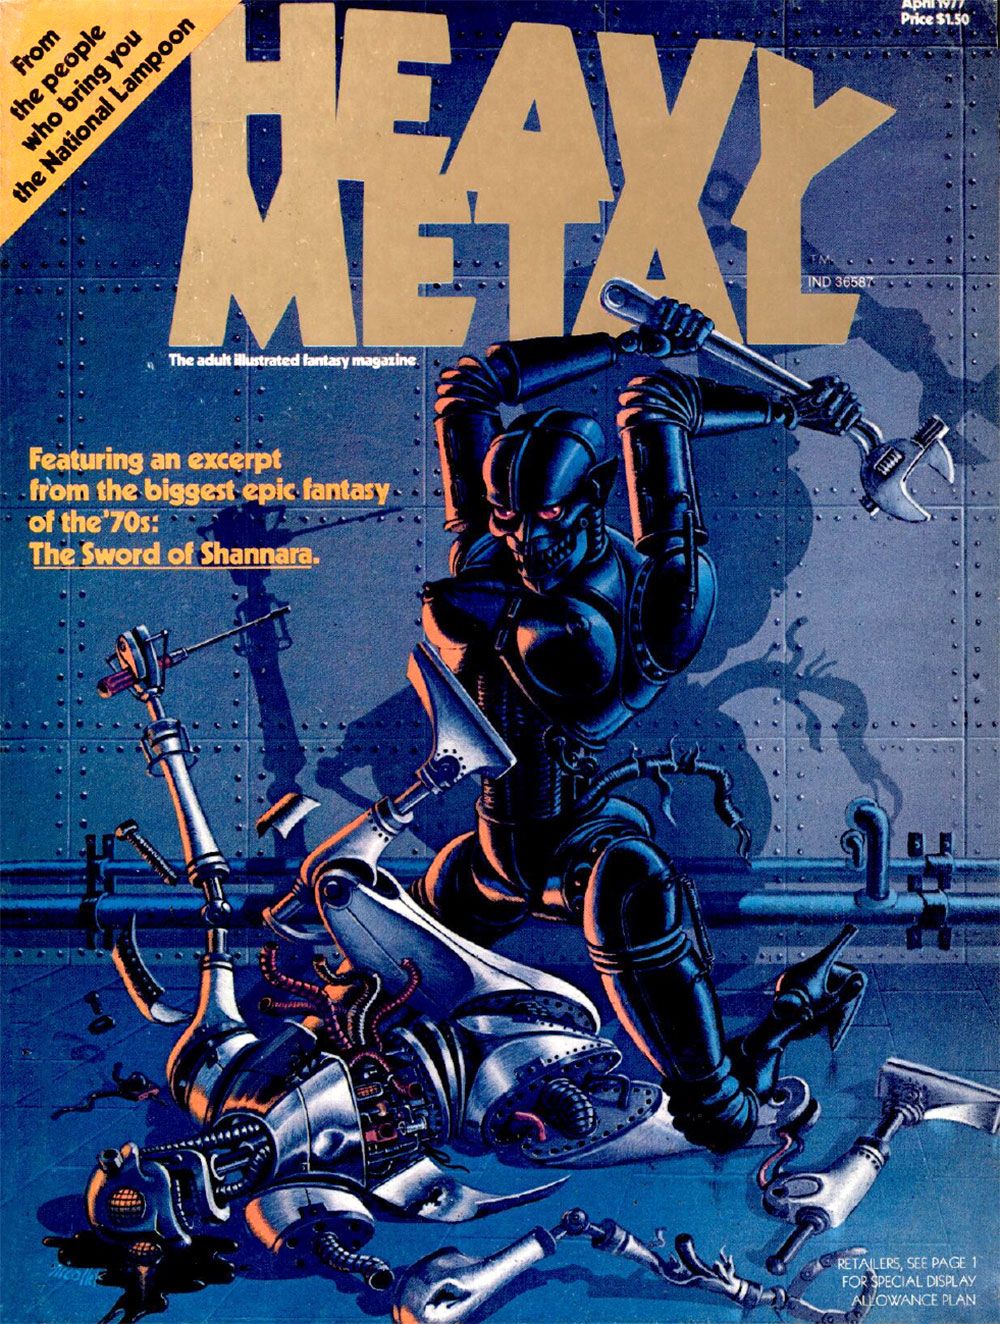 Heavy Metal Magazine - April 1977